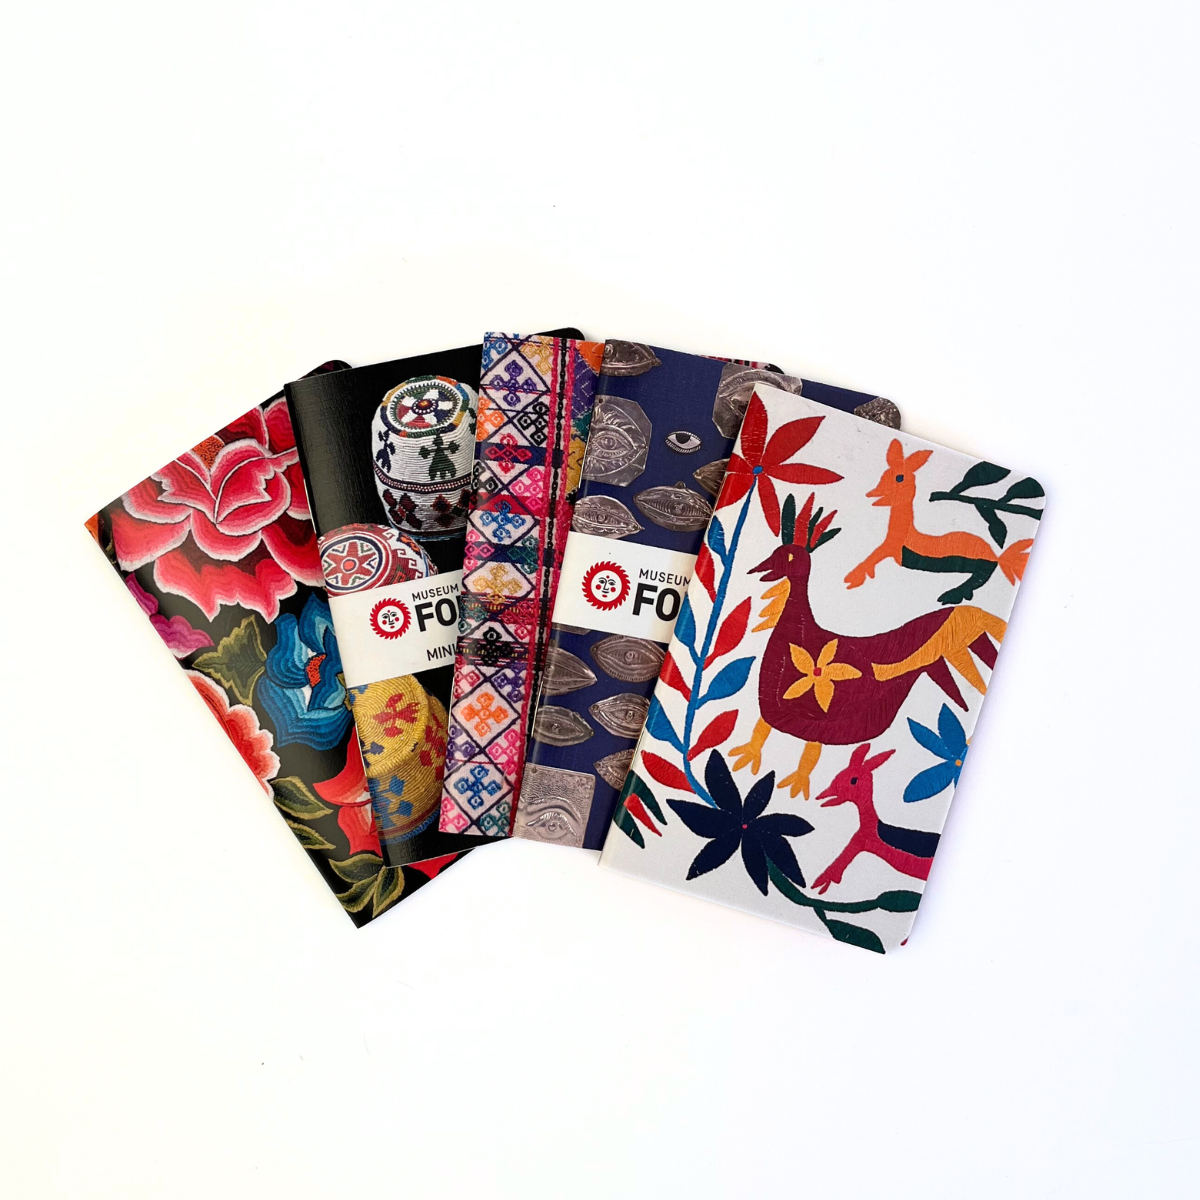 Set of Five Folk Art Mini Notebooks